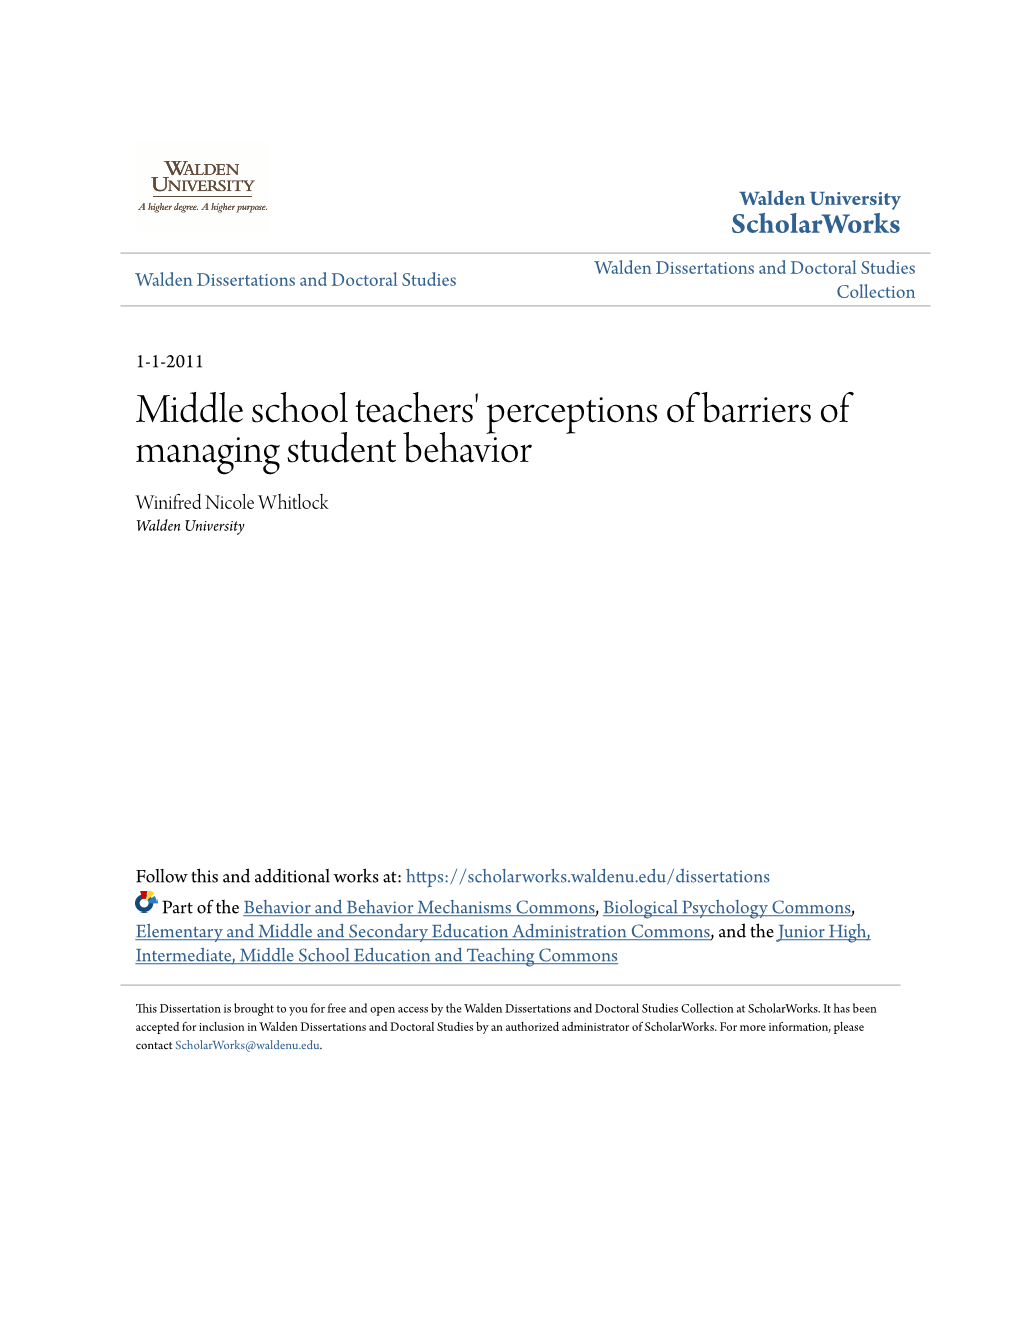 Middle School Teachers' Perceptions of Barriers of Managing Student Behavior Winifred Nicole Whitlock Walden University